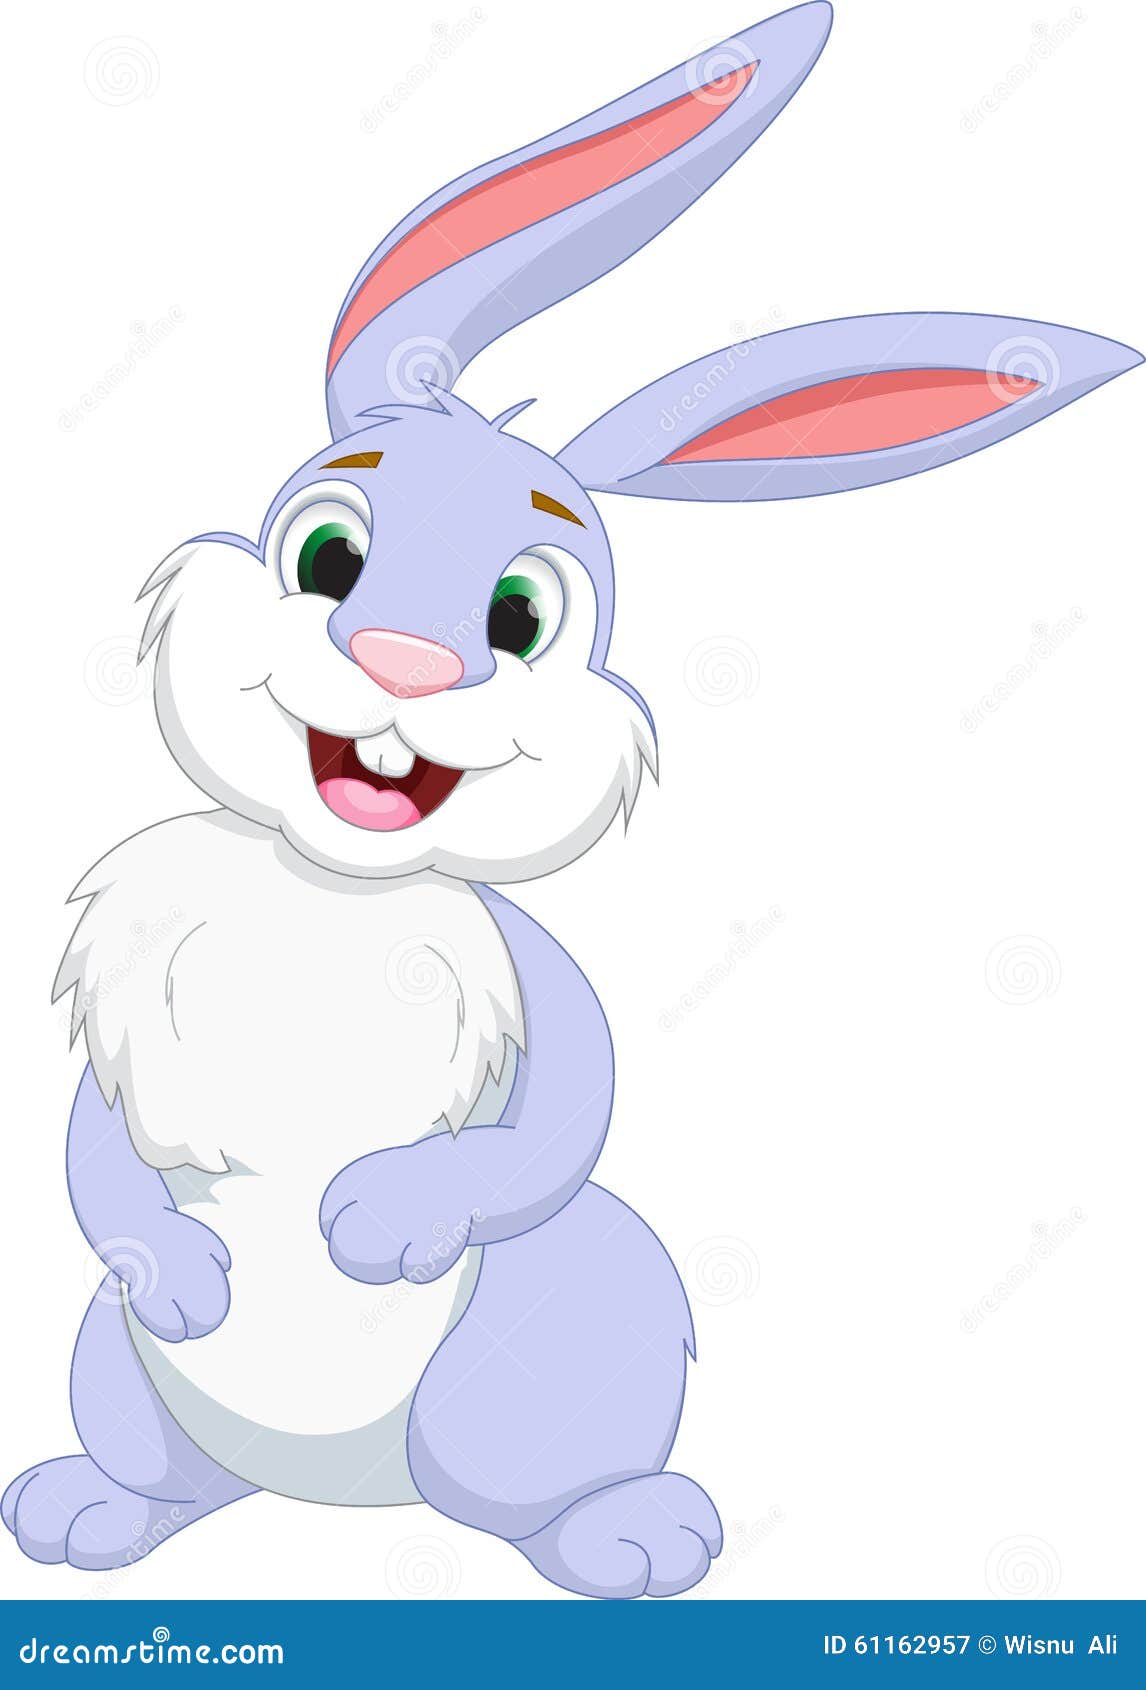 Cute rabbit cartoon stock vector. Illustration of white - 61162957